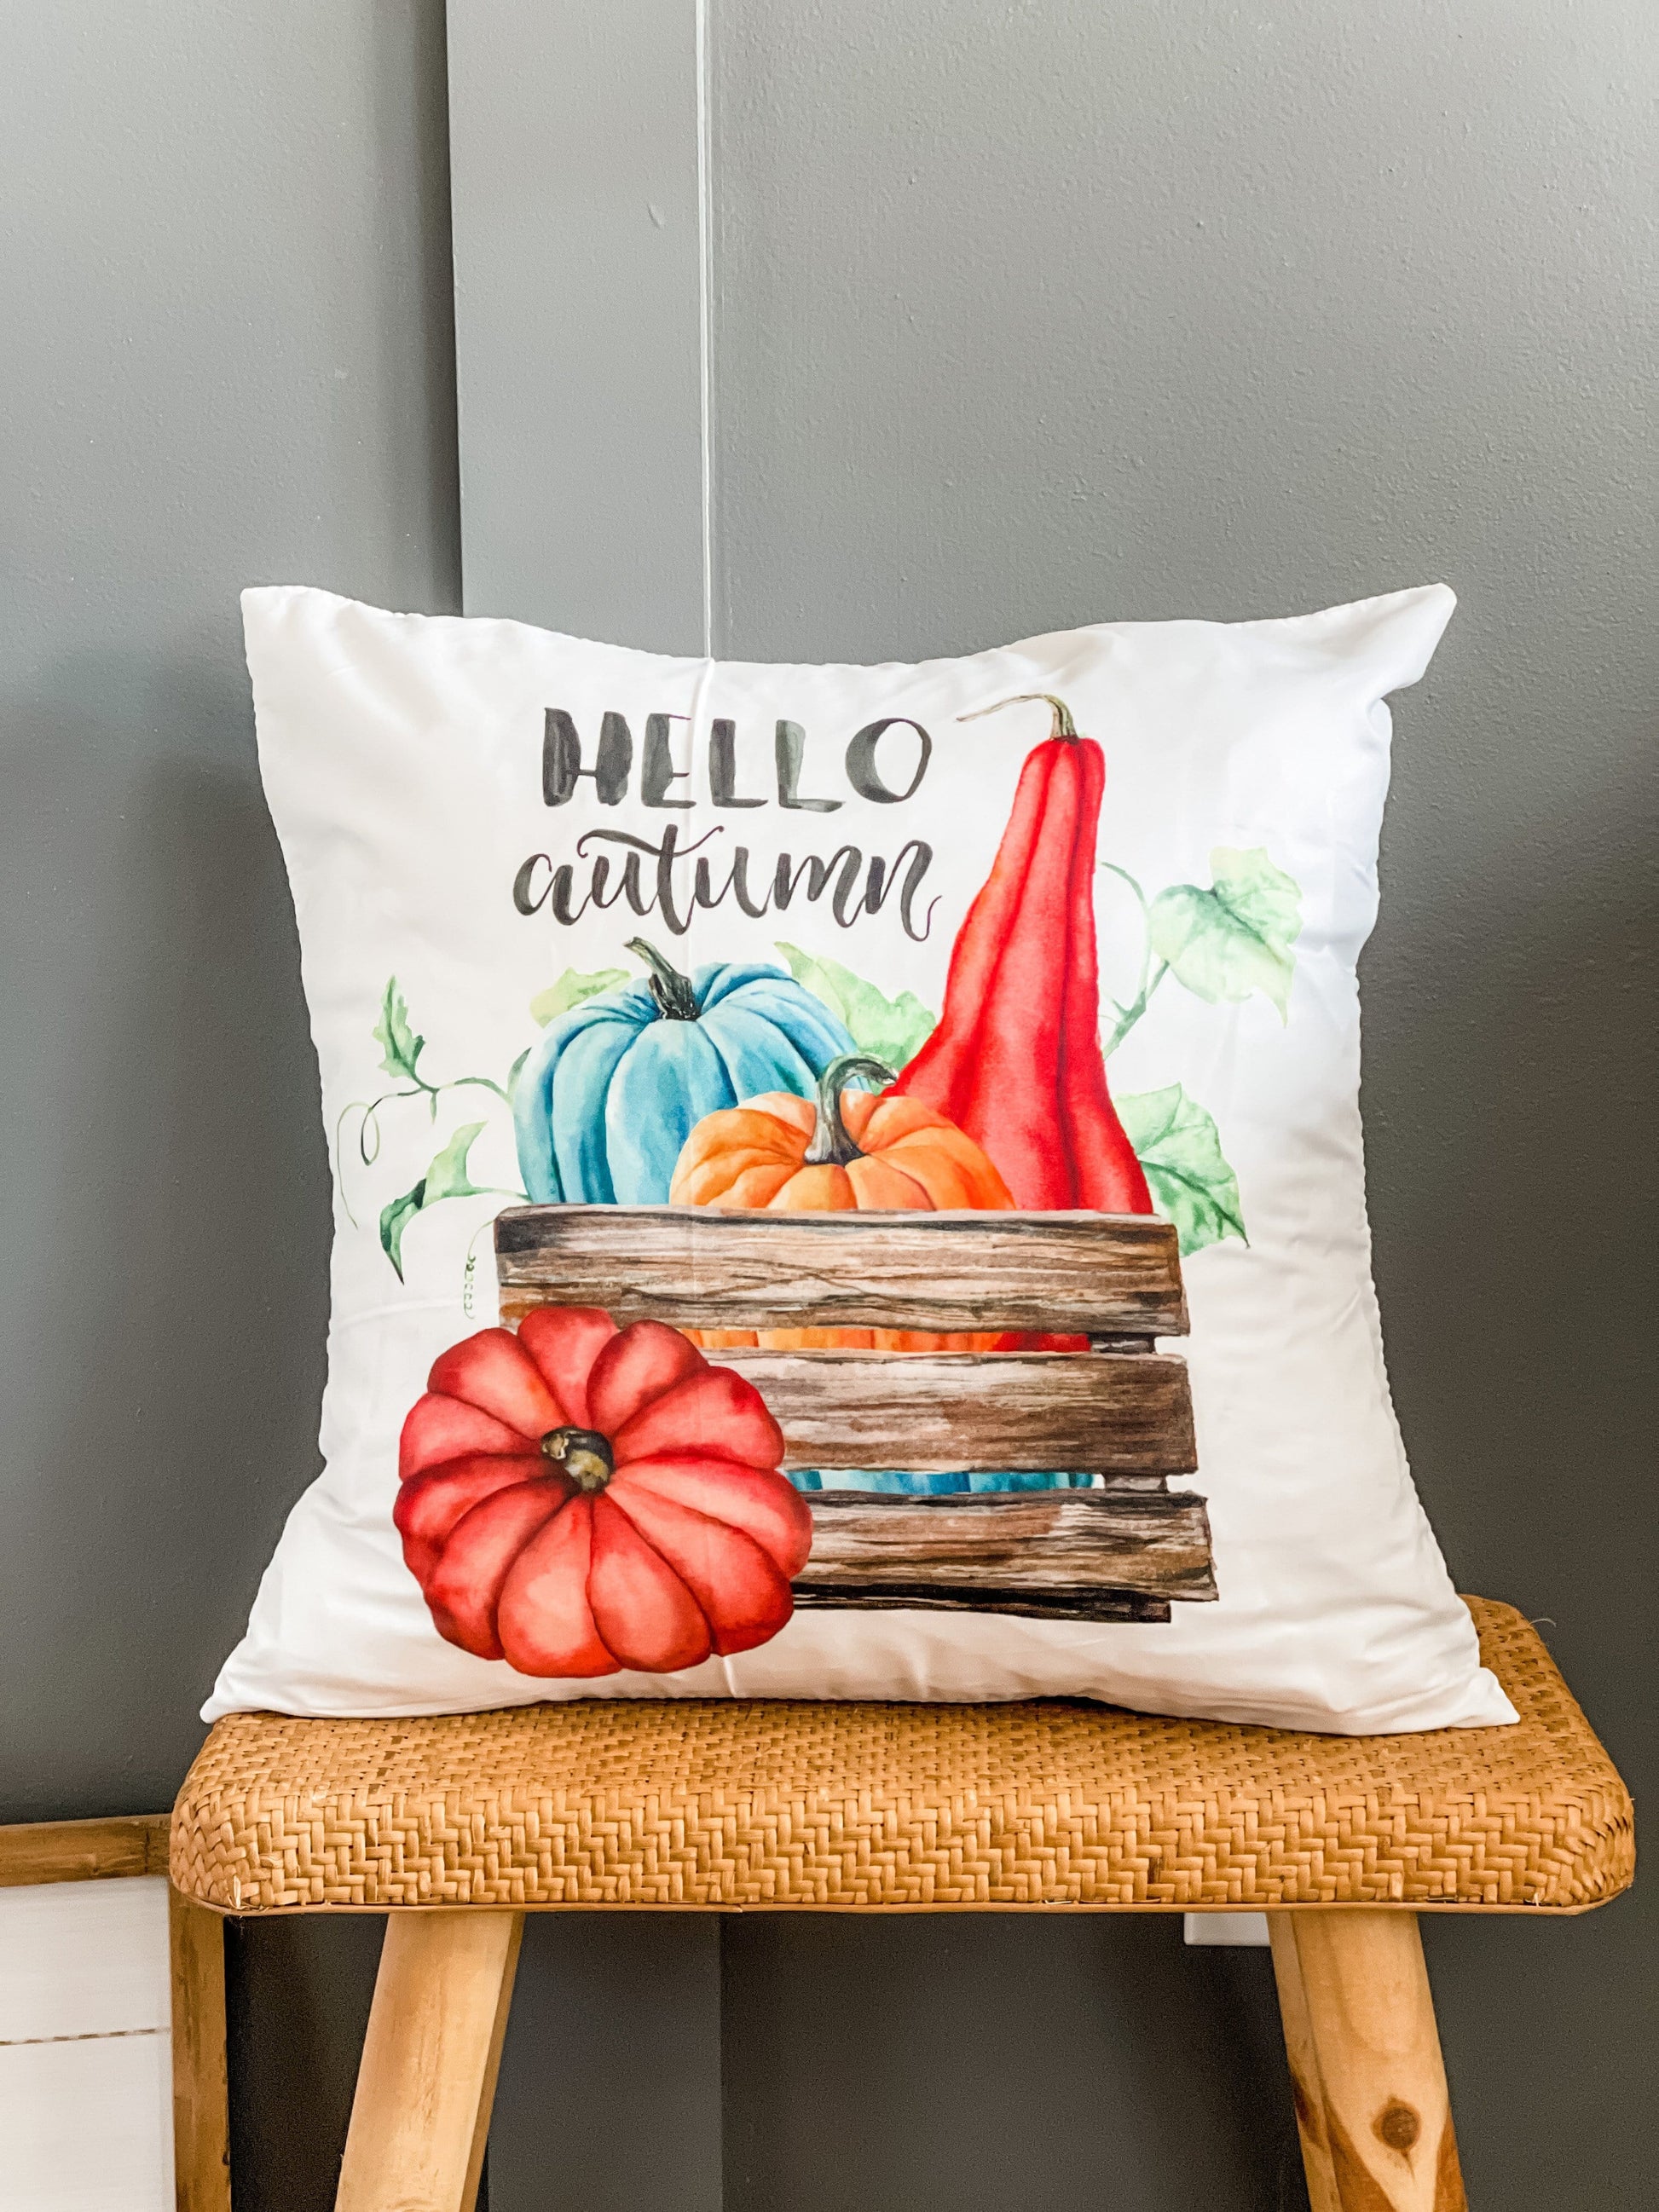 Fall Pillow Covers - Hello Autumn - Fall decor